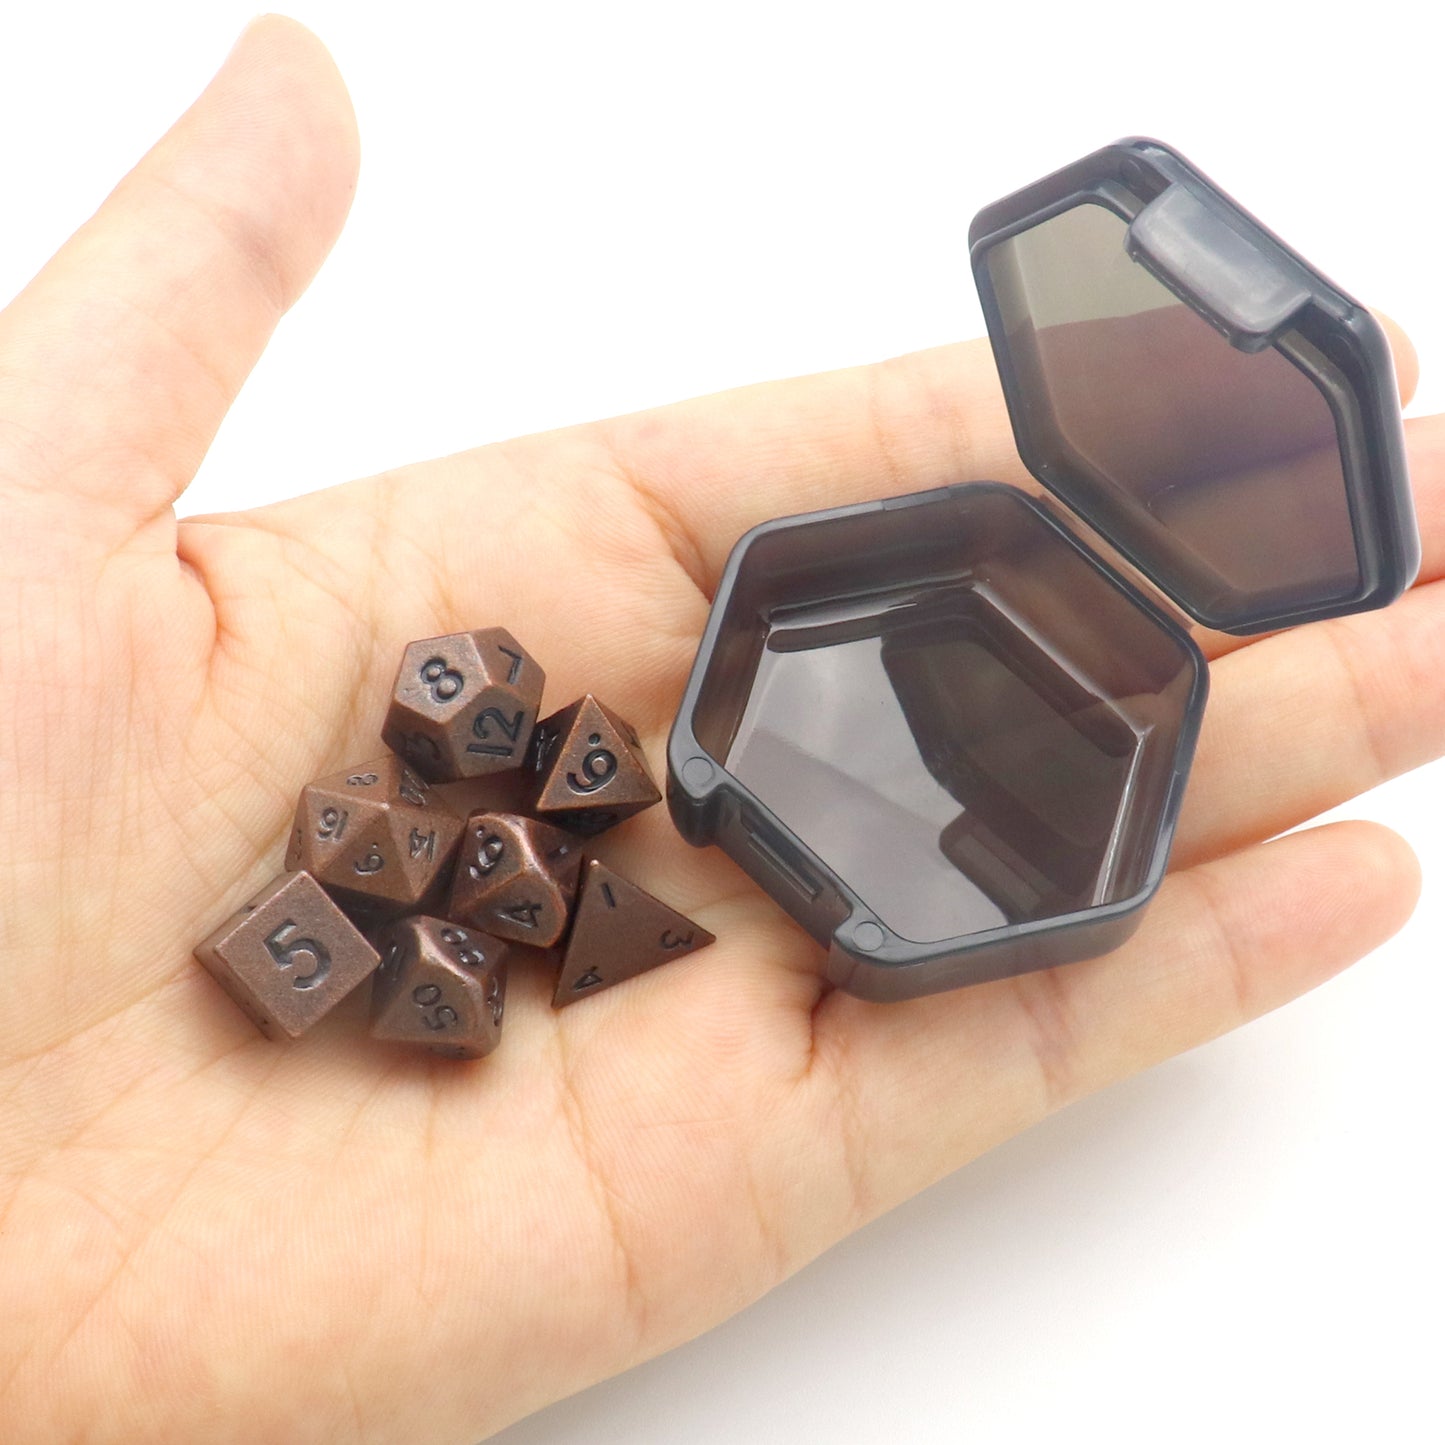 Haxtec Mini Metal Dice Set D&D 10mm Mini Dice with Portable Dice Case